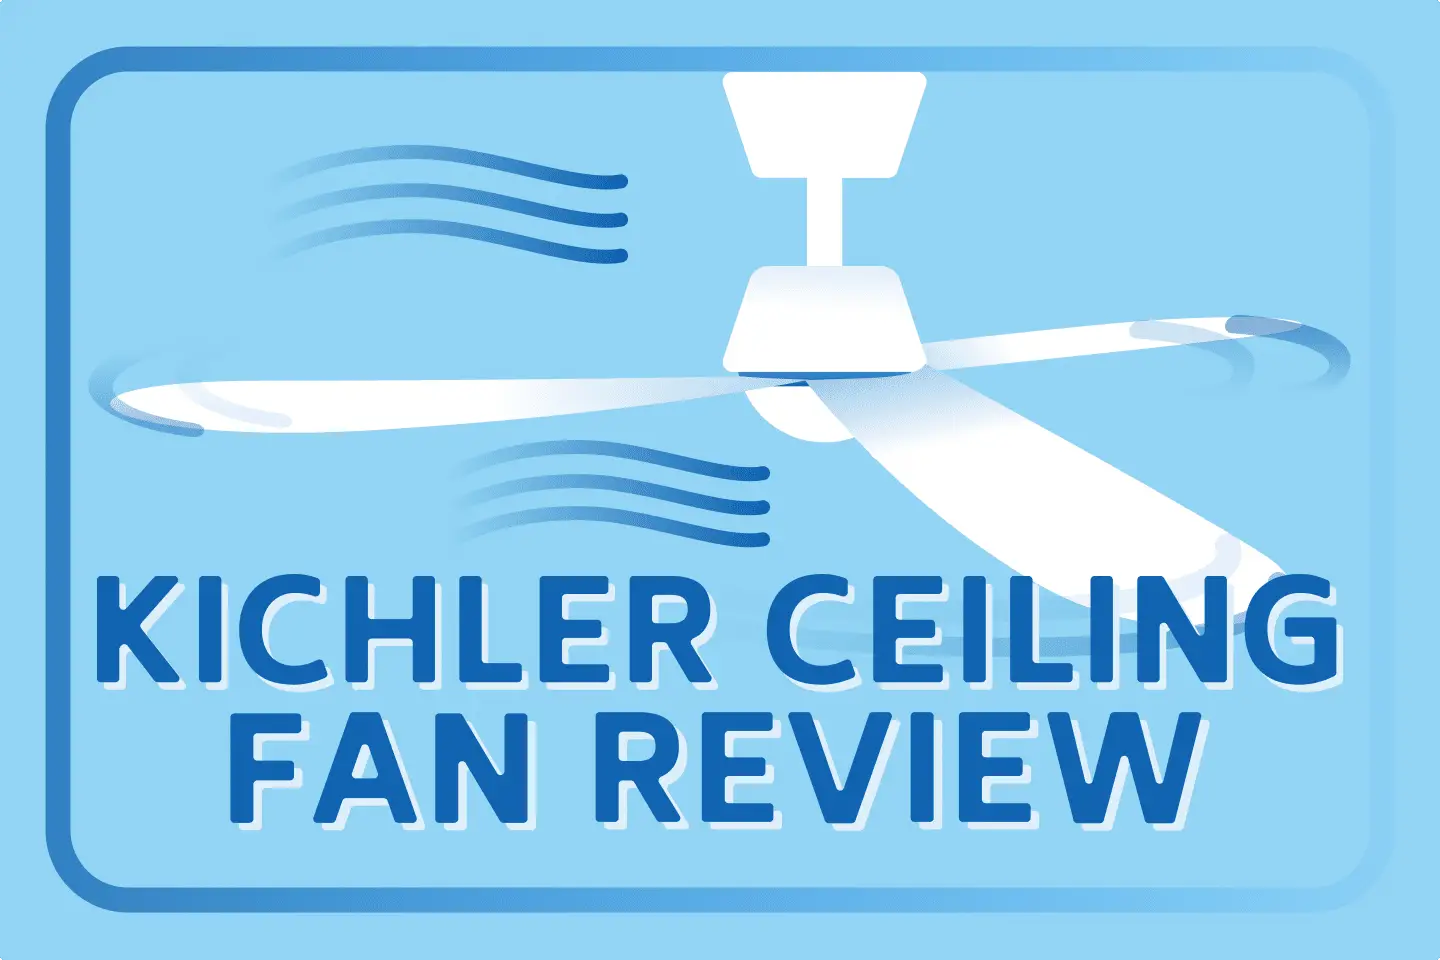 Best Kichler Ceiling Fans [Top 6 Picks]